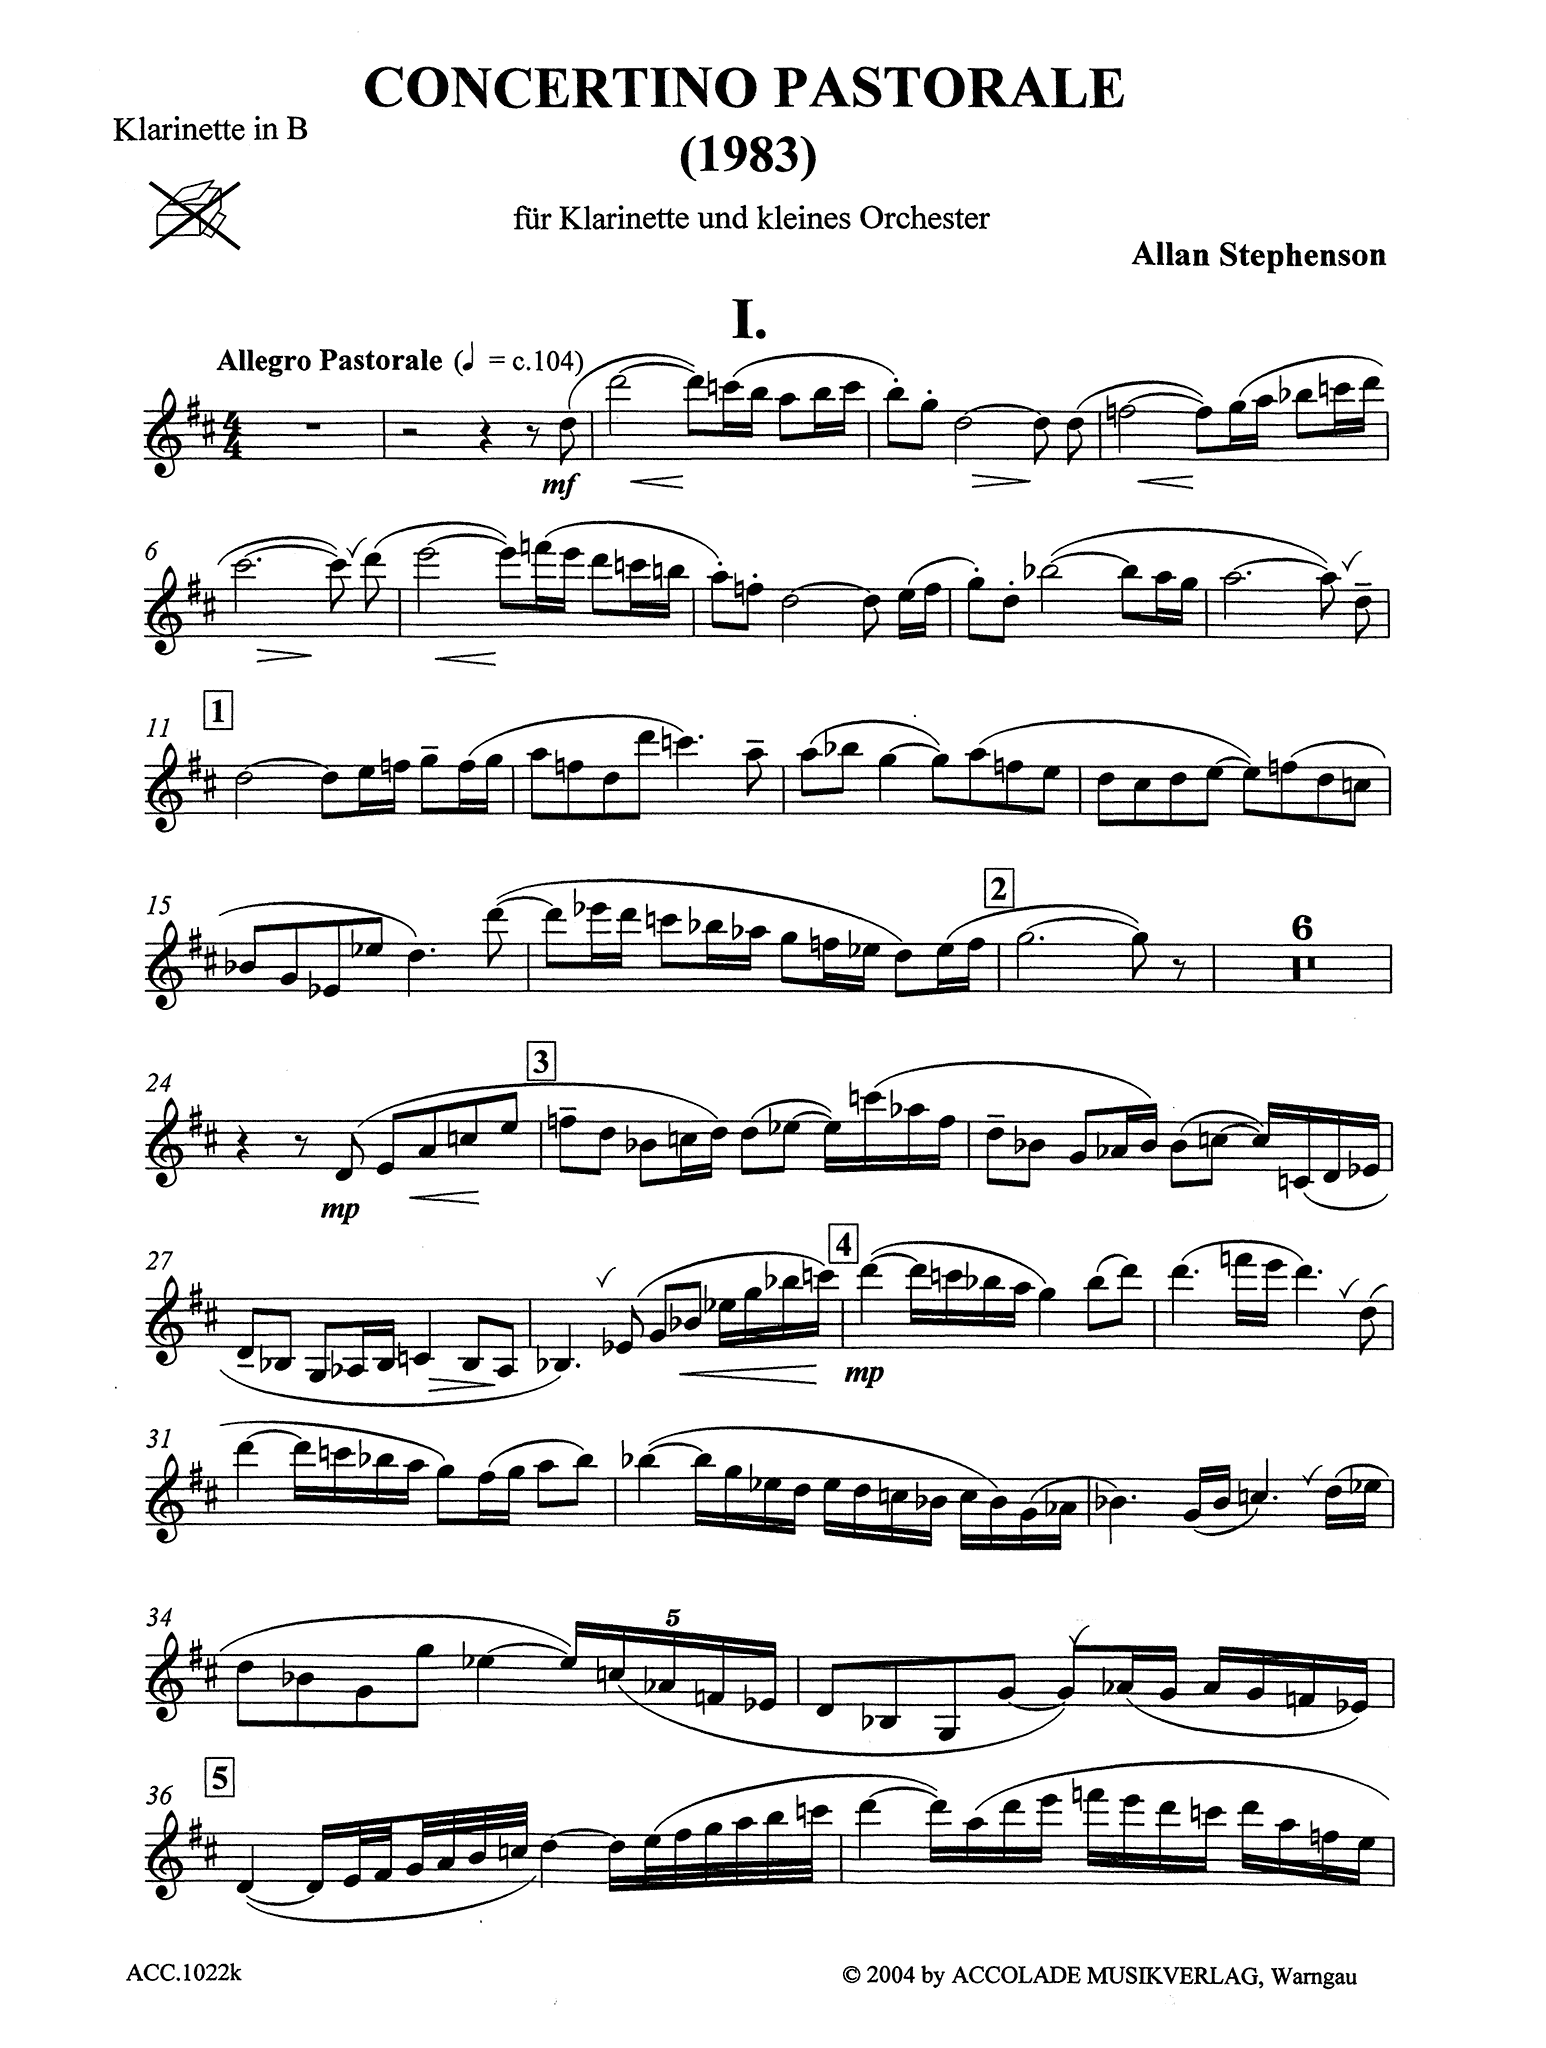 Stephenson Clarinet Concertino Pastorale solo part